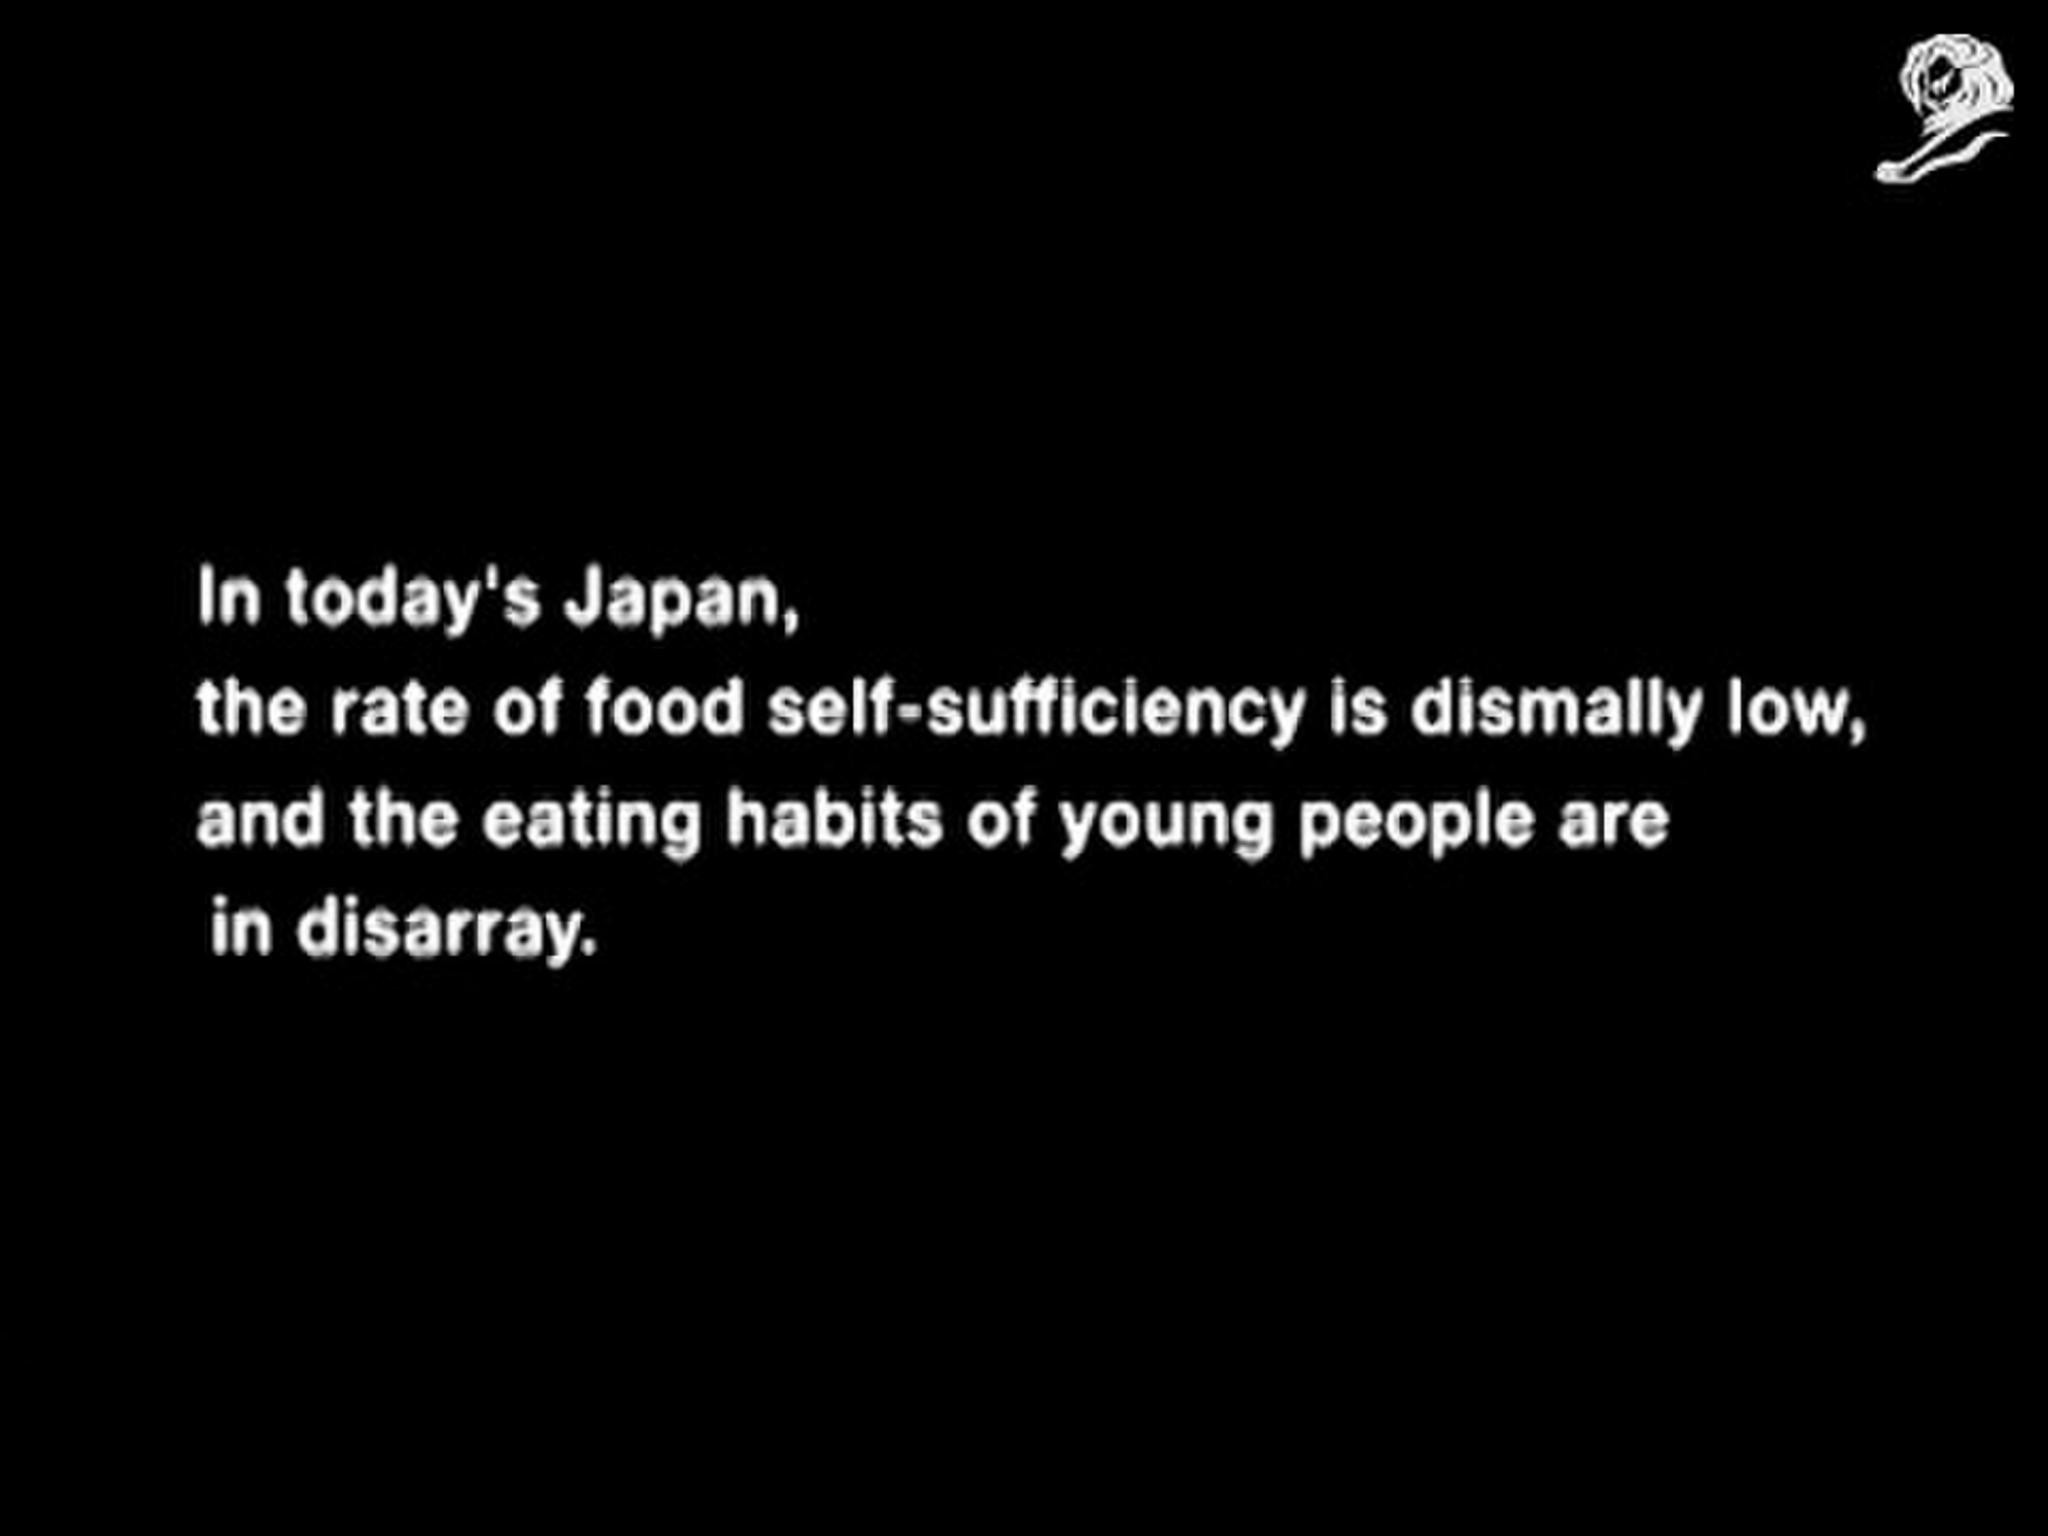 TV-CAMPAIGN 'SAVE JAPAN'S FOOD'